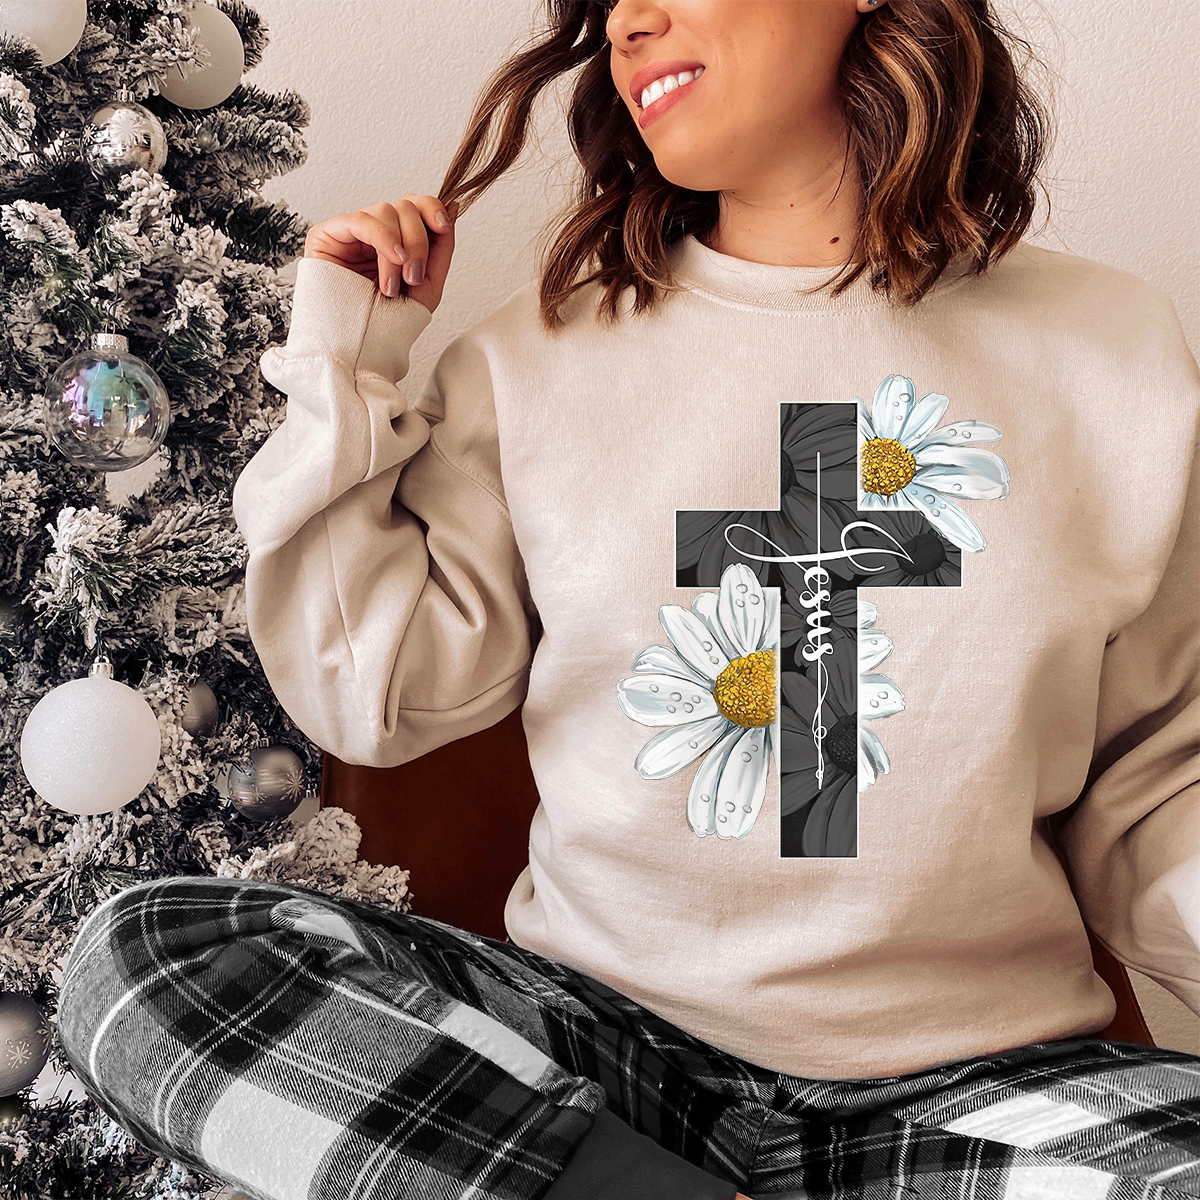 Jesus Cross Daisies Sweatshirt